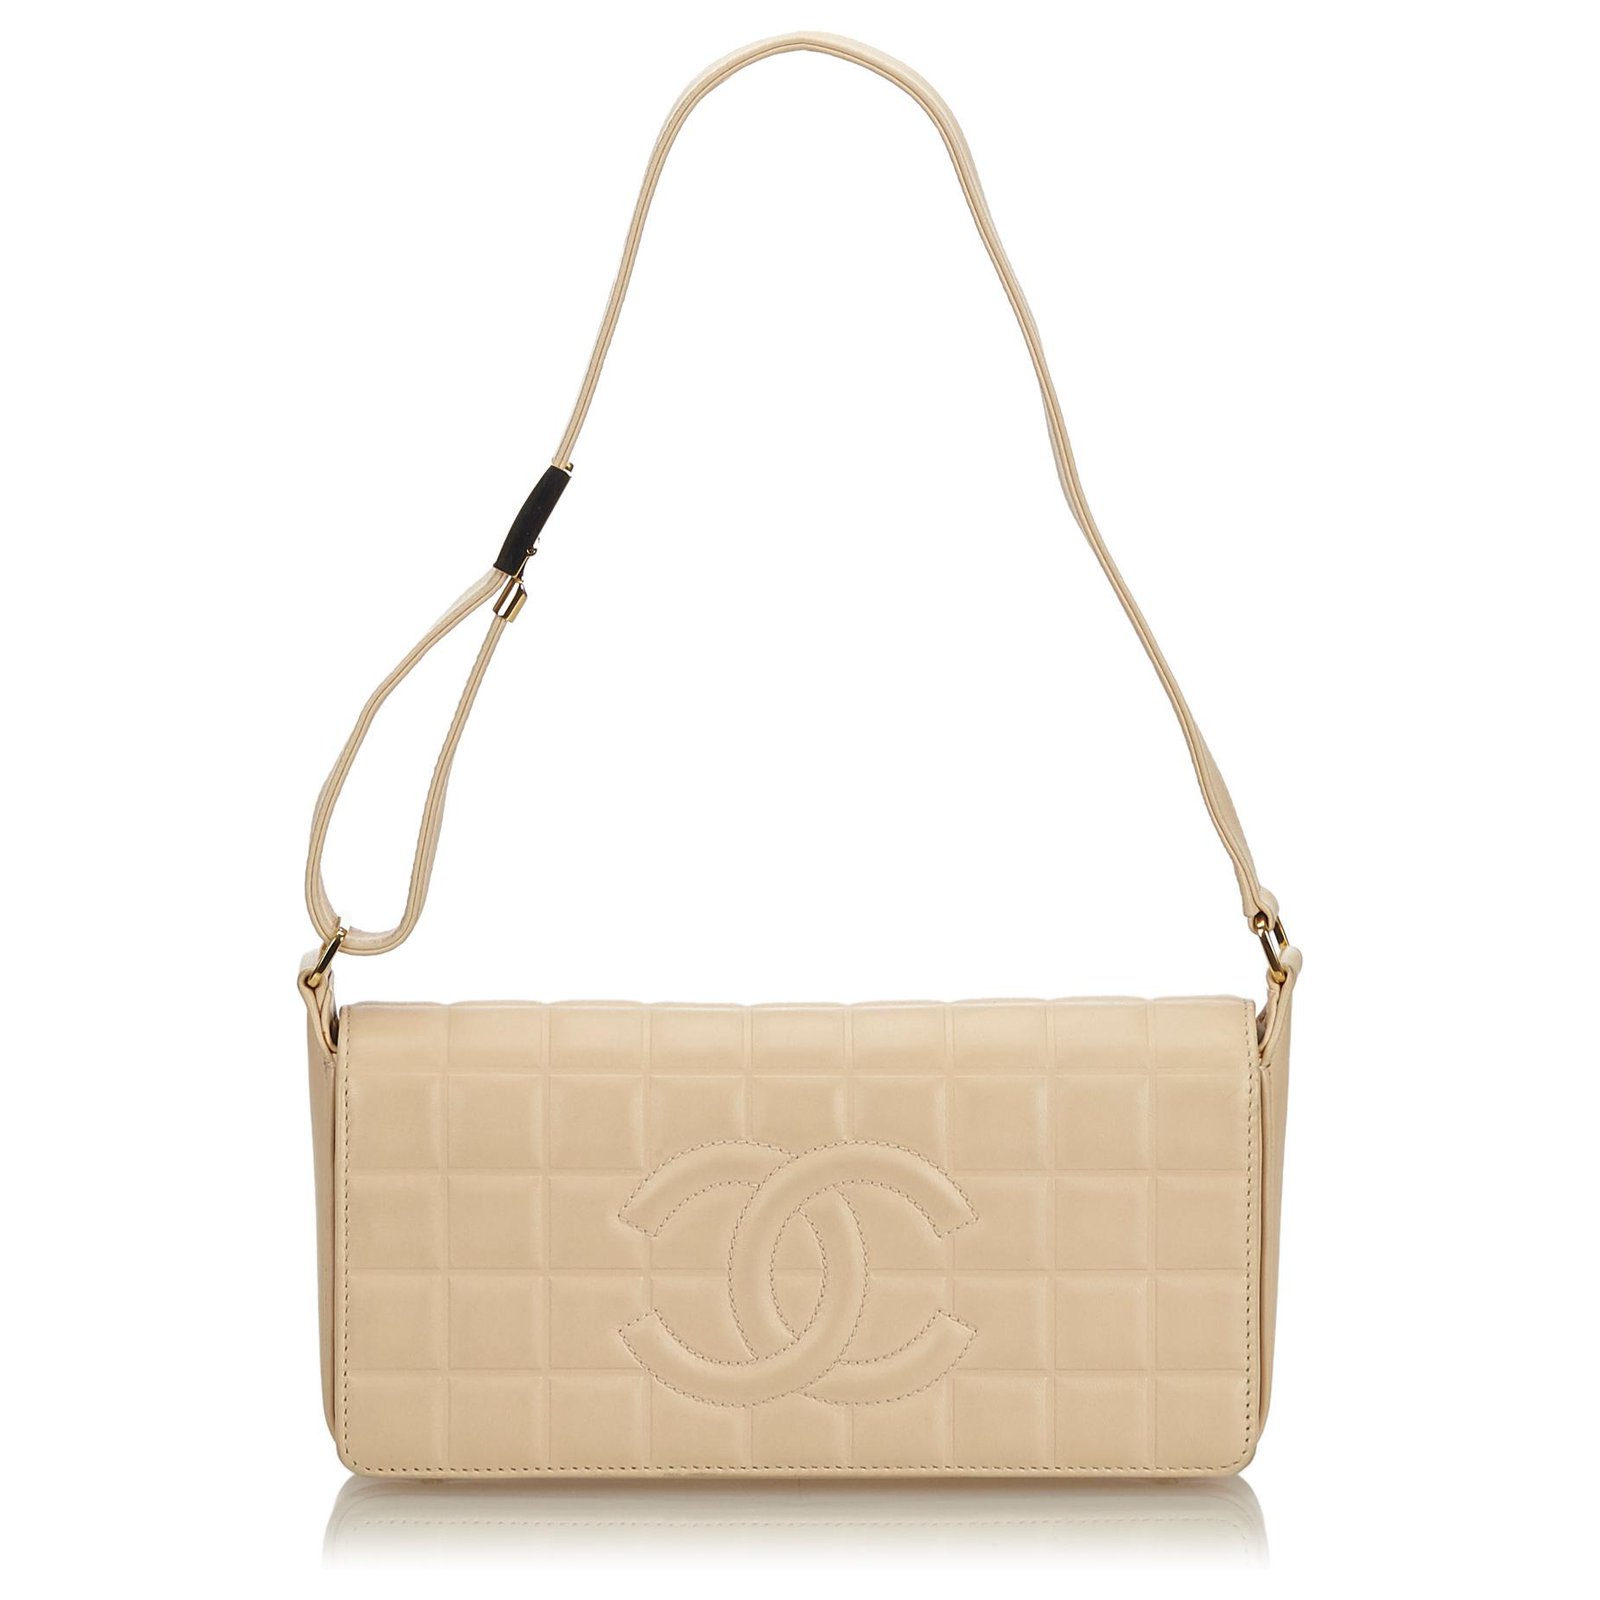 Chanel Brown Leather Chocolate Bar Shoulder Bag